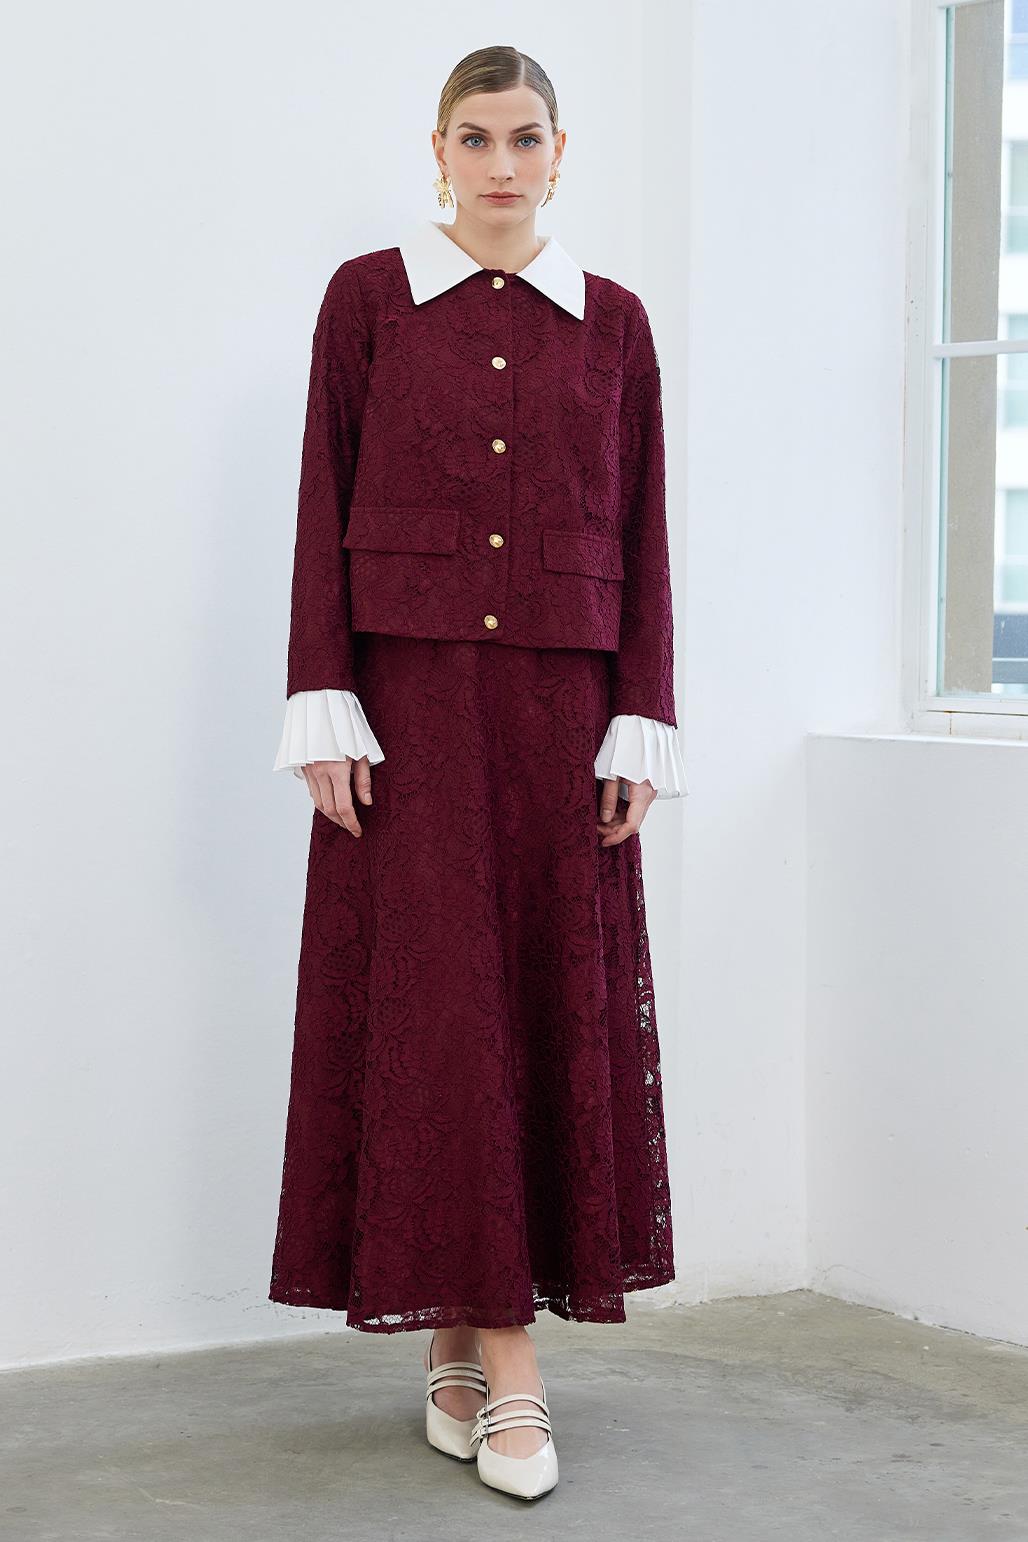 Lace Pleat Sleeve Detailed Jacket Bell Skirt Set Burgundy